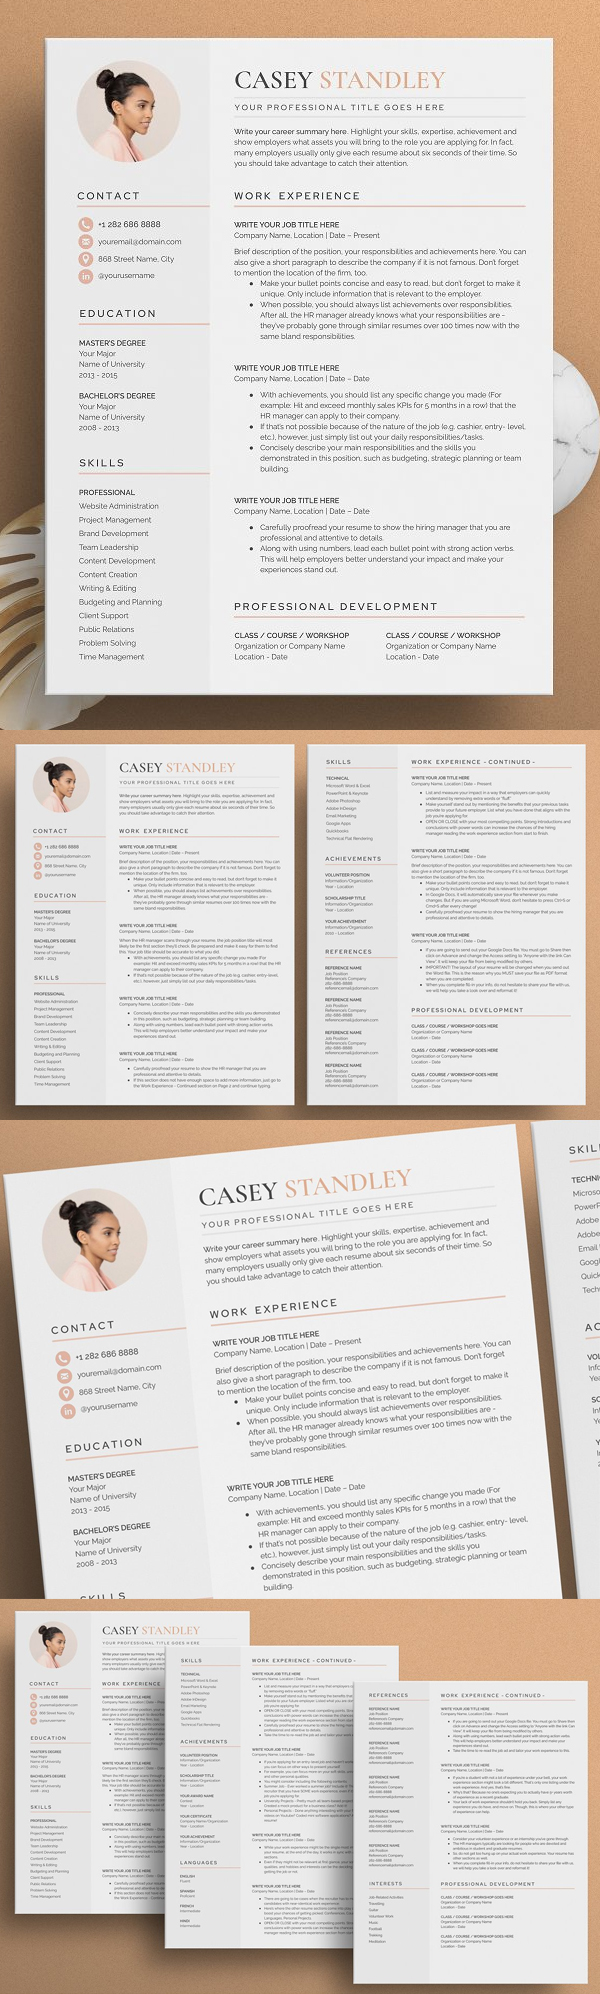 Resume / CV - The Standley